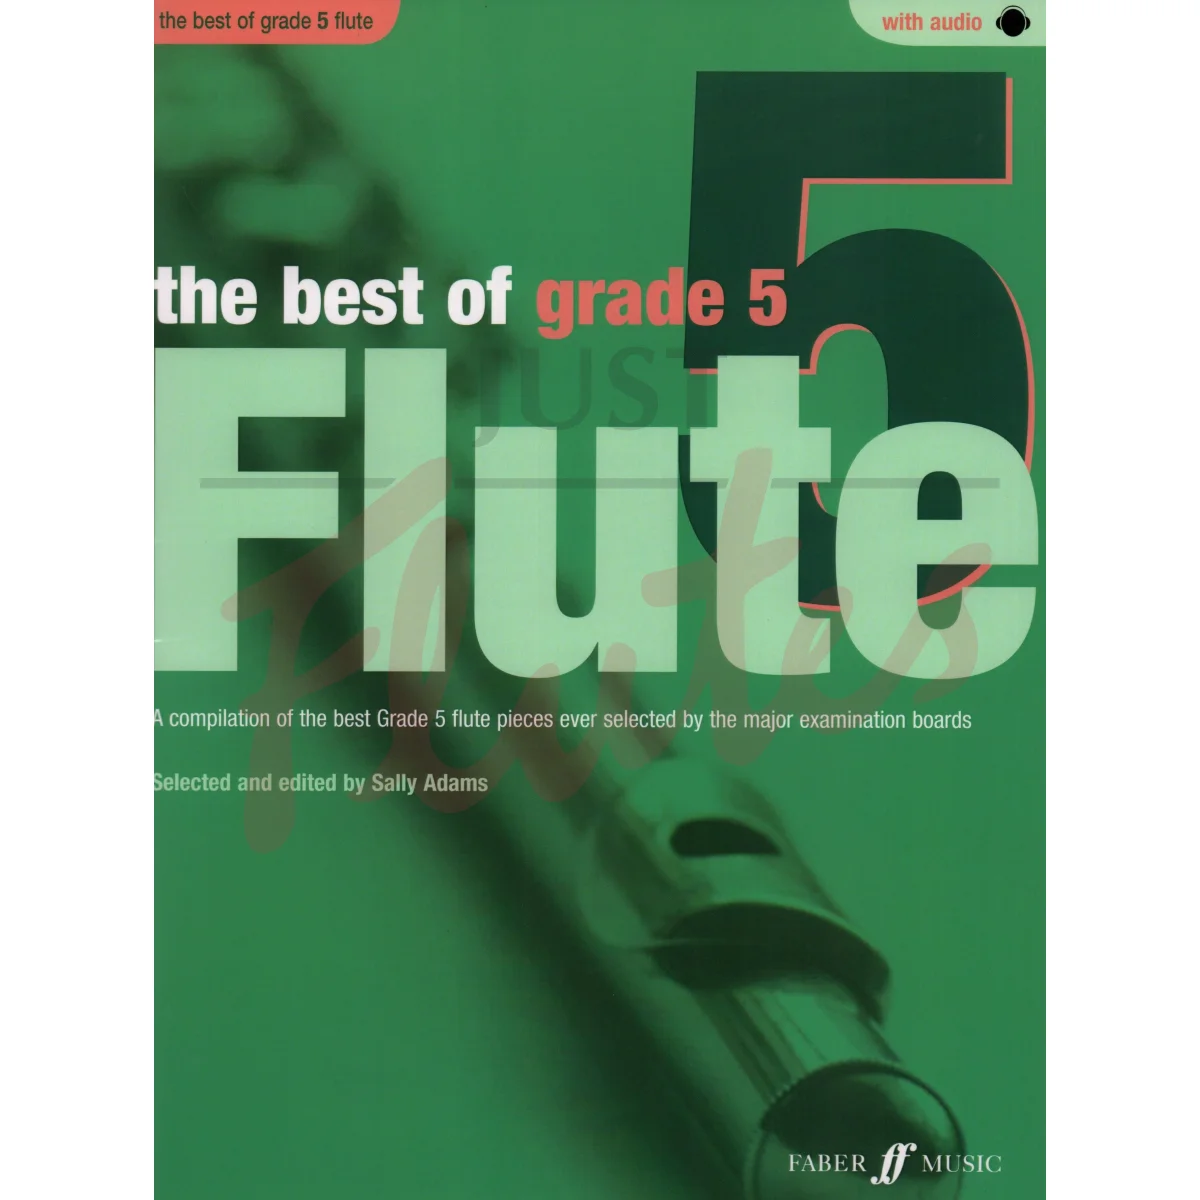 The Best of Grade 5 Flute